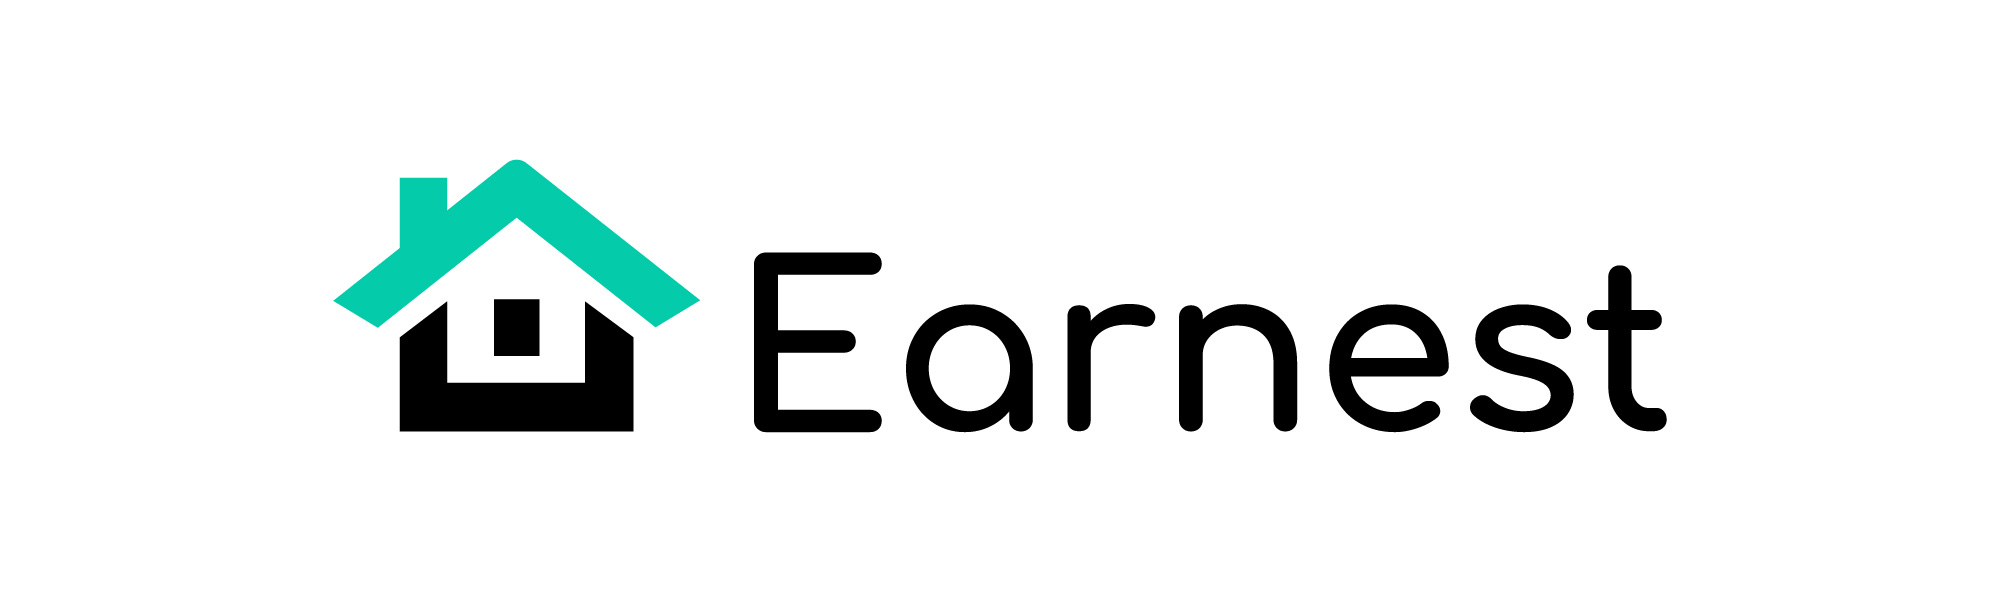 Earnest Homes logo